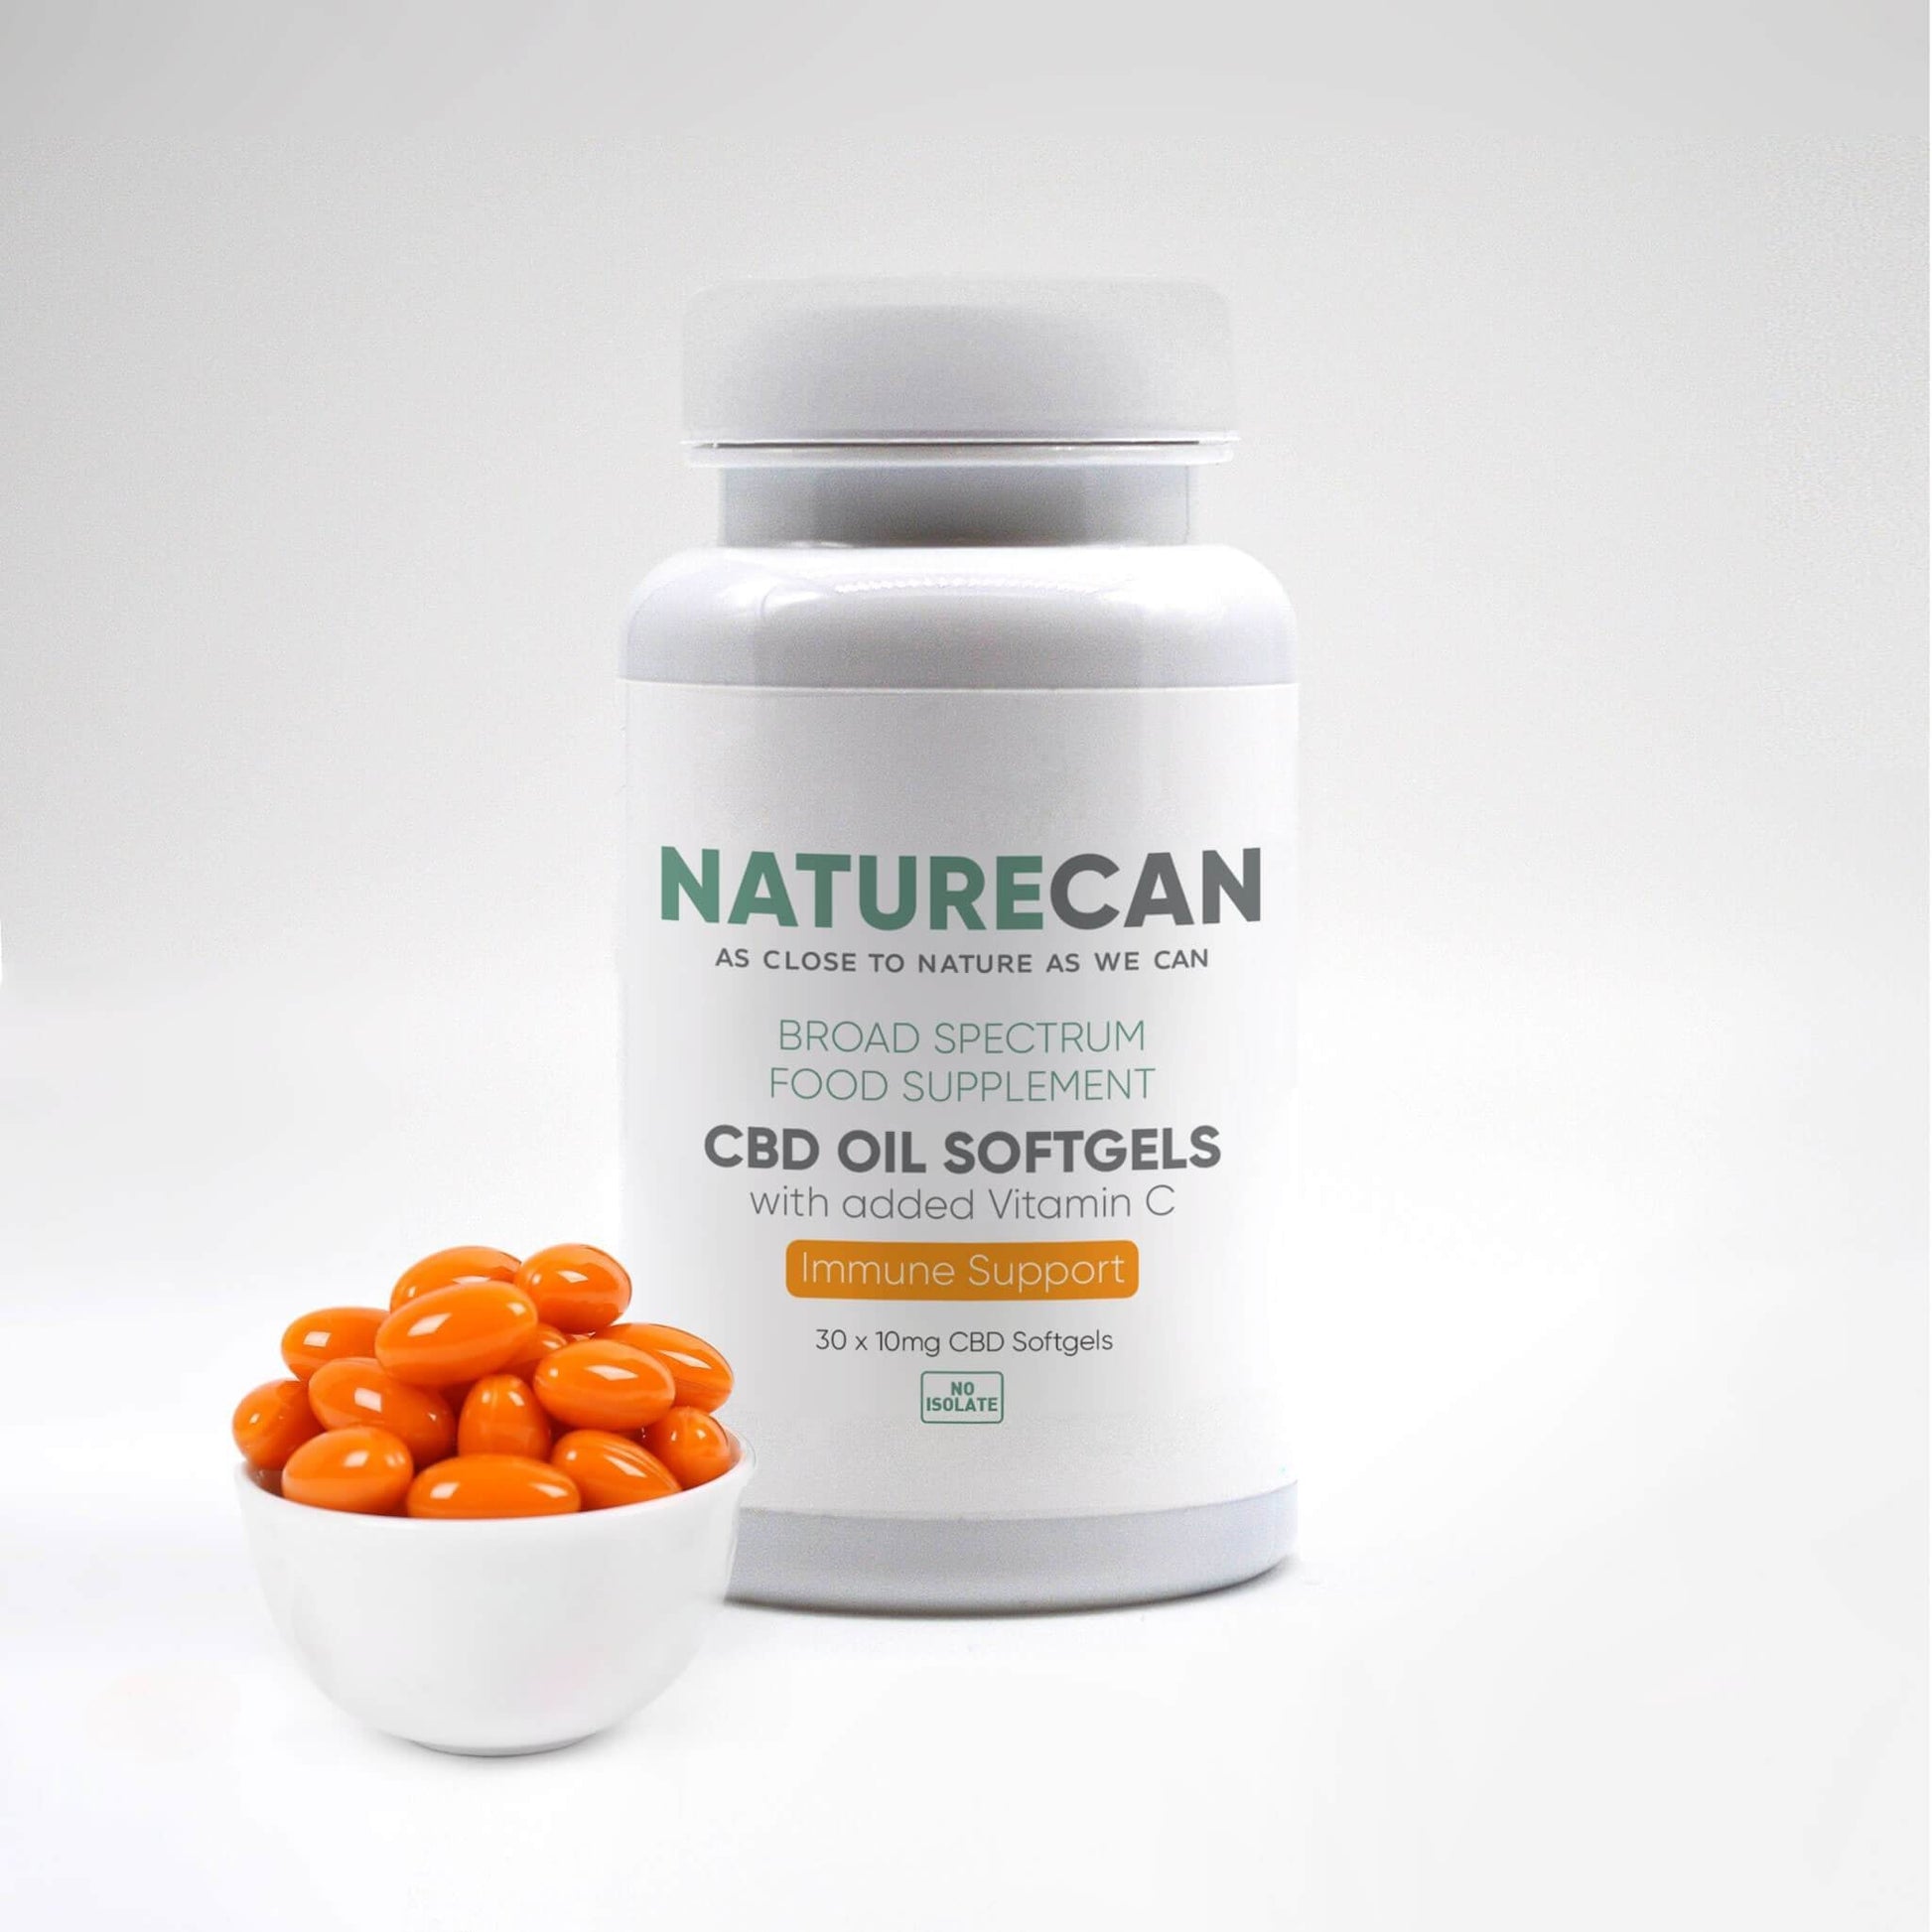 CBD softgels with added vitamin C